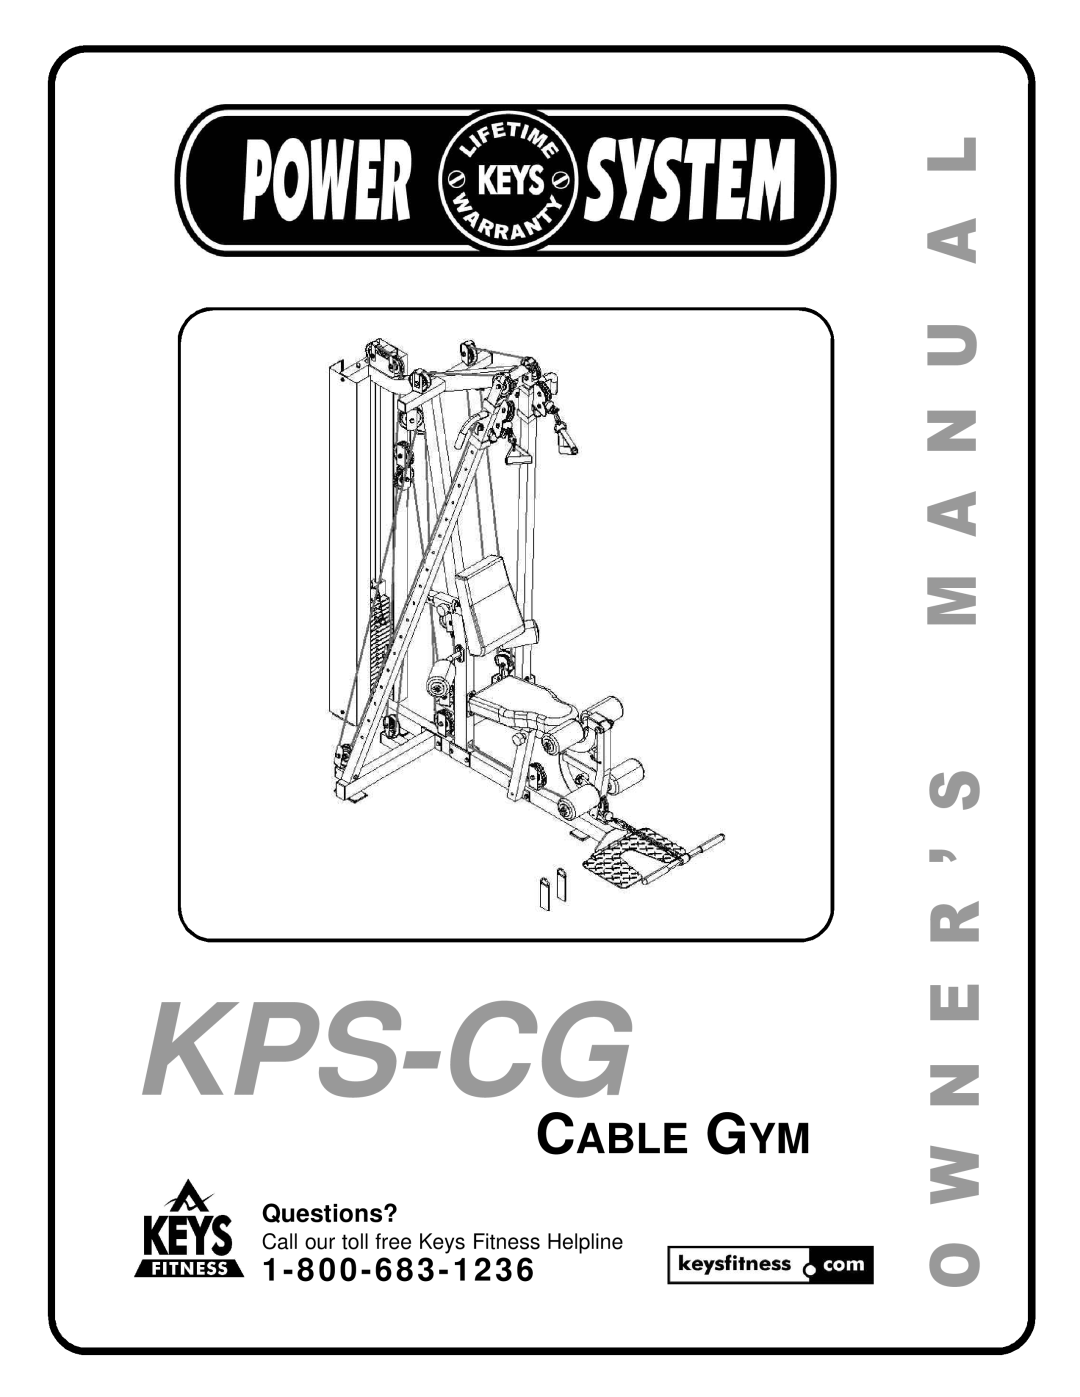 Keys Fitness KPS-CG owner manual 1 - 8 0 0 - 6 8 3 - 1 2, Questions?, Kps-Cg, M A N U A L O W N E R ’ S, Cable Gym 